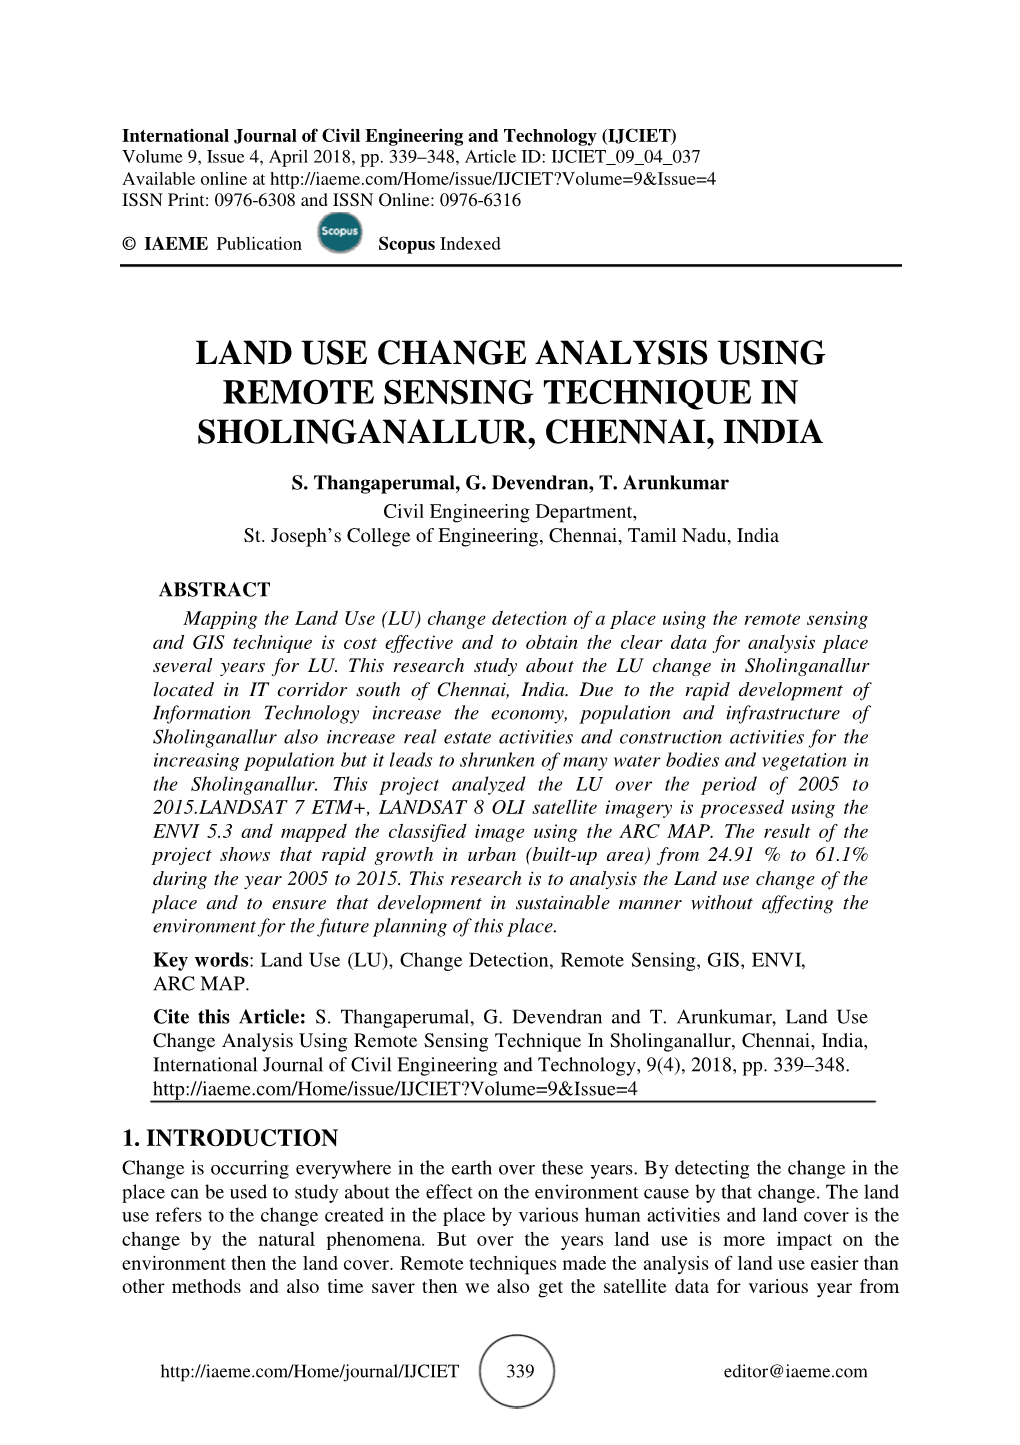 Land Use Change Analysis Using Remote Sensing Technique in Sholinganallur, Chennai, India